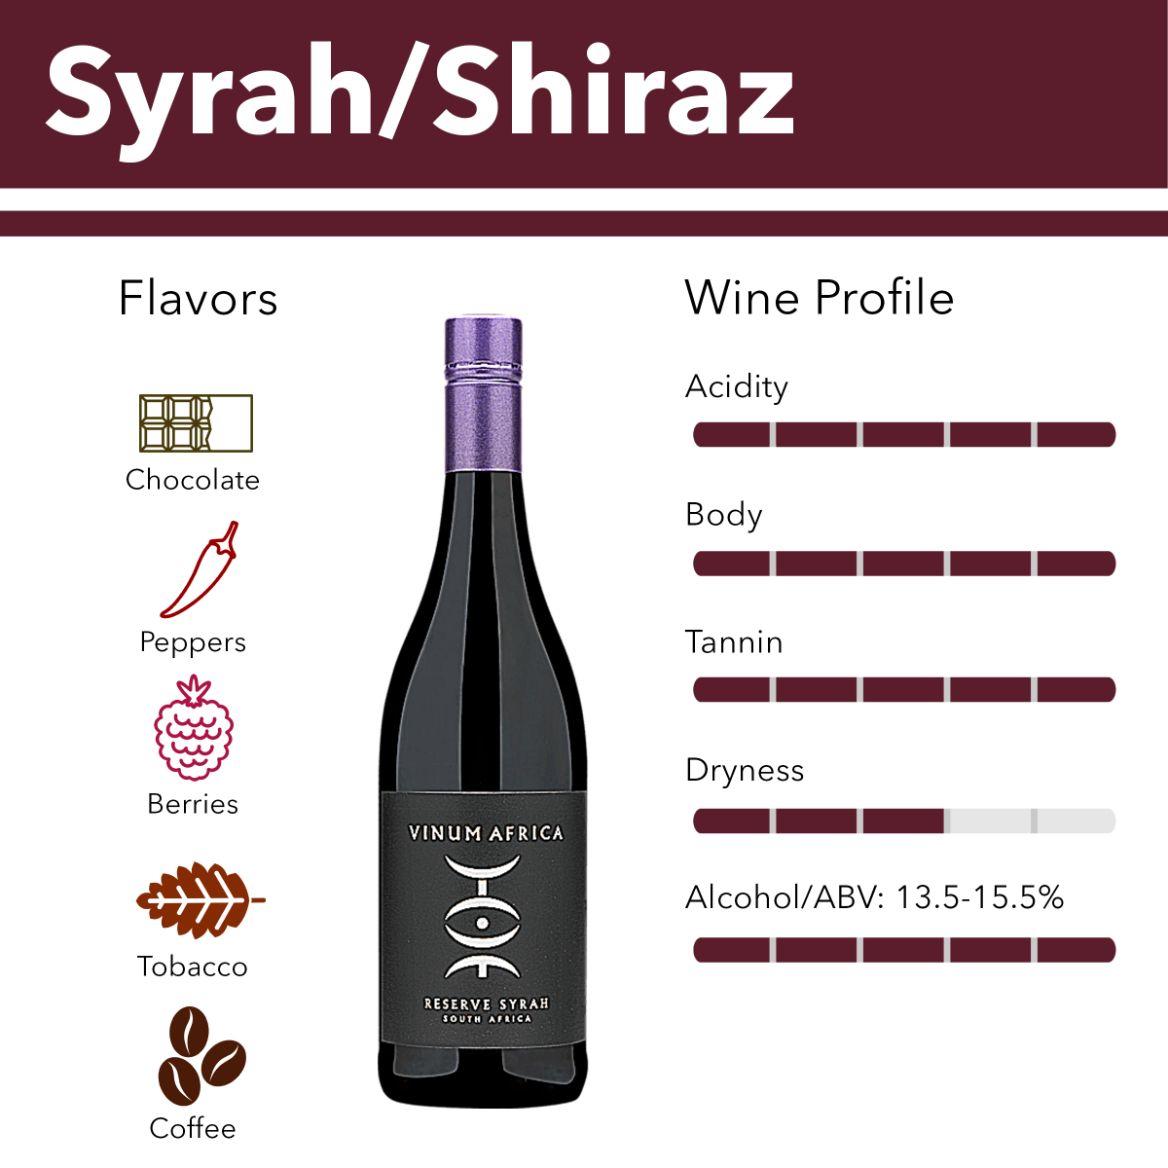 Syrah/Shiraz wine flavor profile.